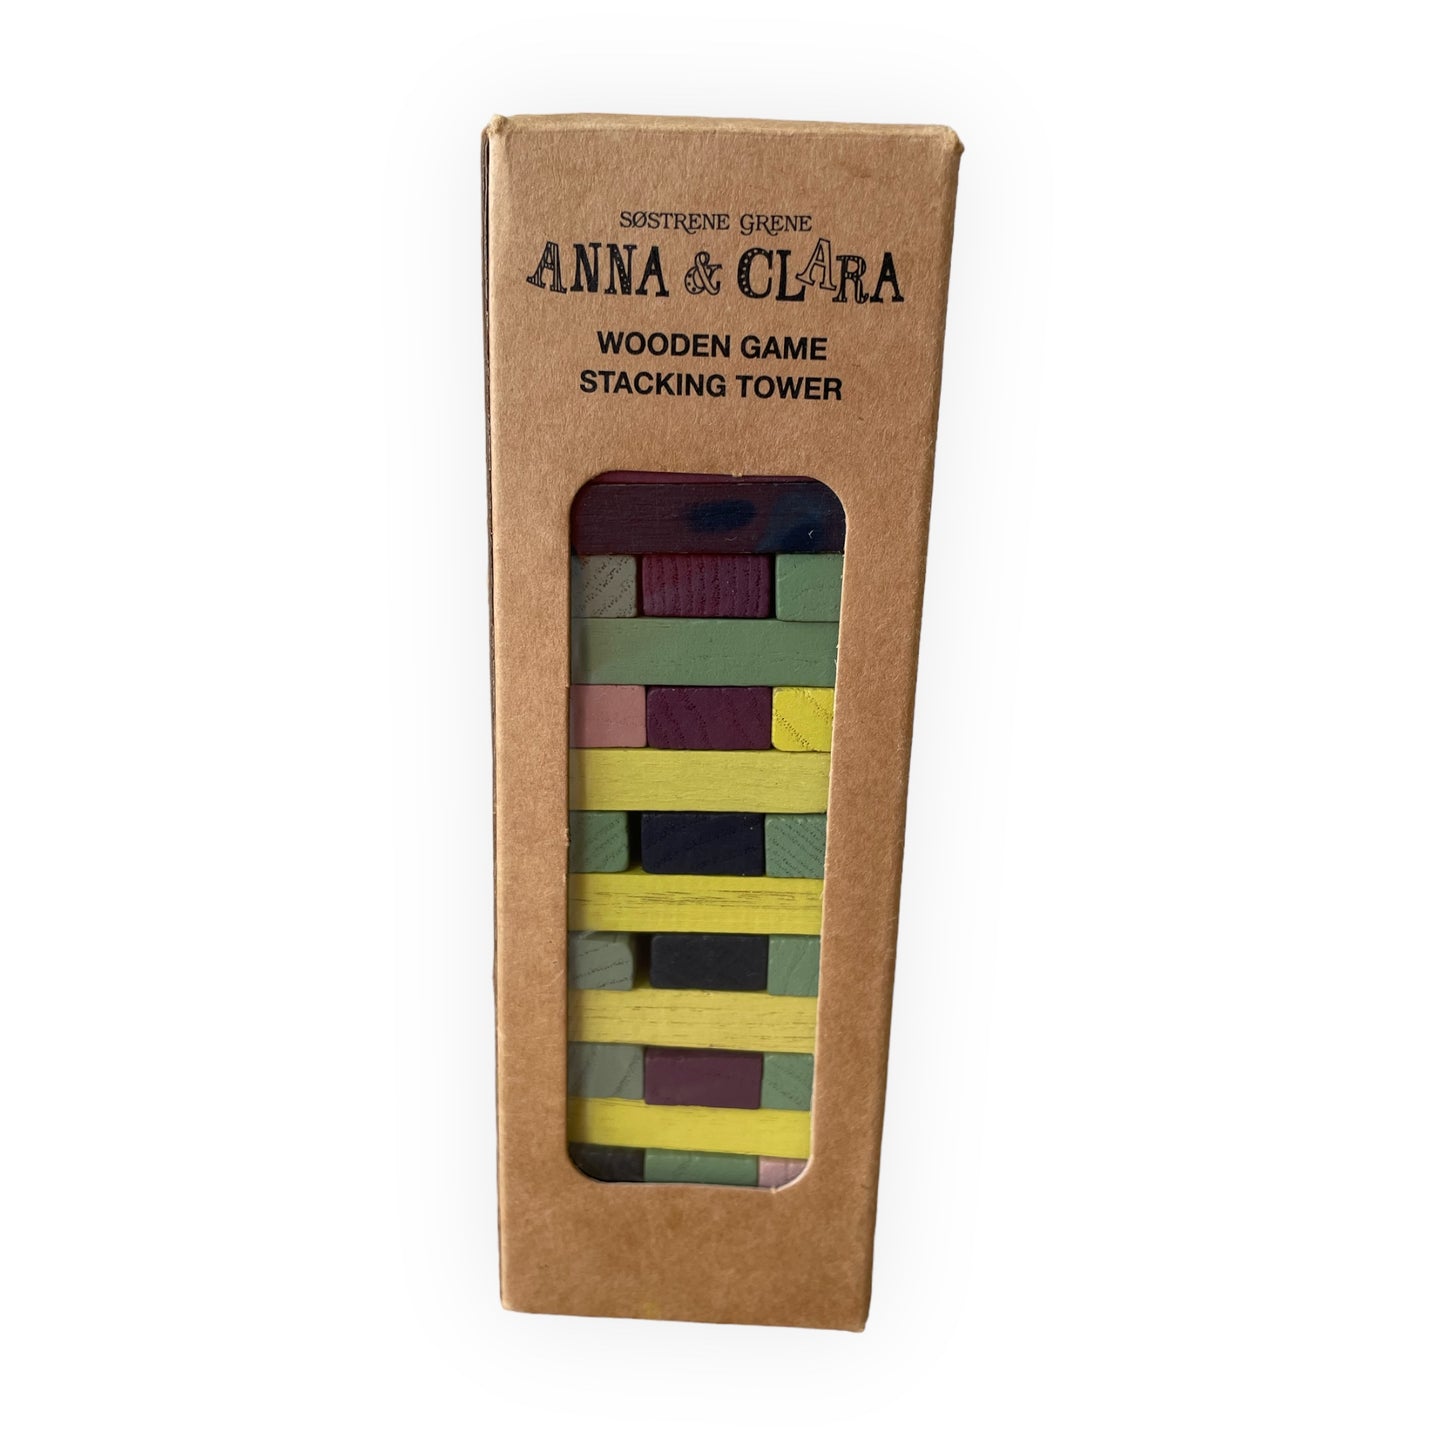 Wooden Game Stacking Tower Anna & Clara from Sostrene Greene Nordic brand